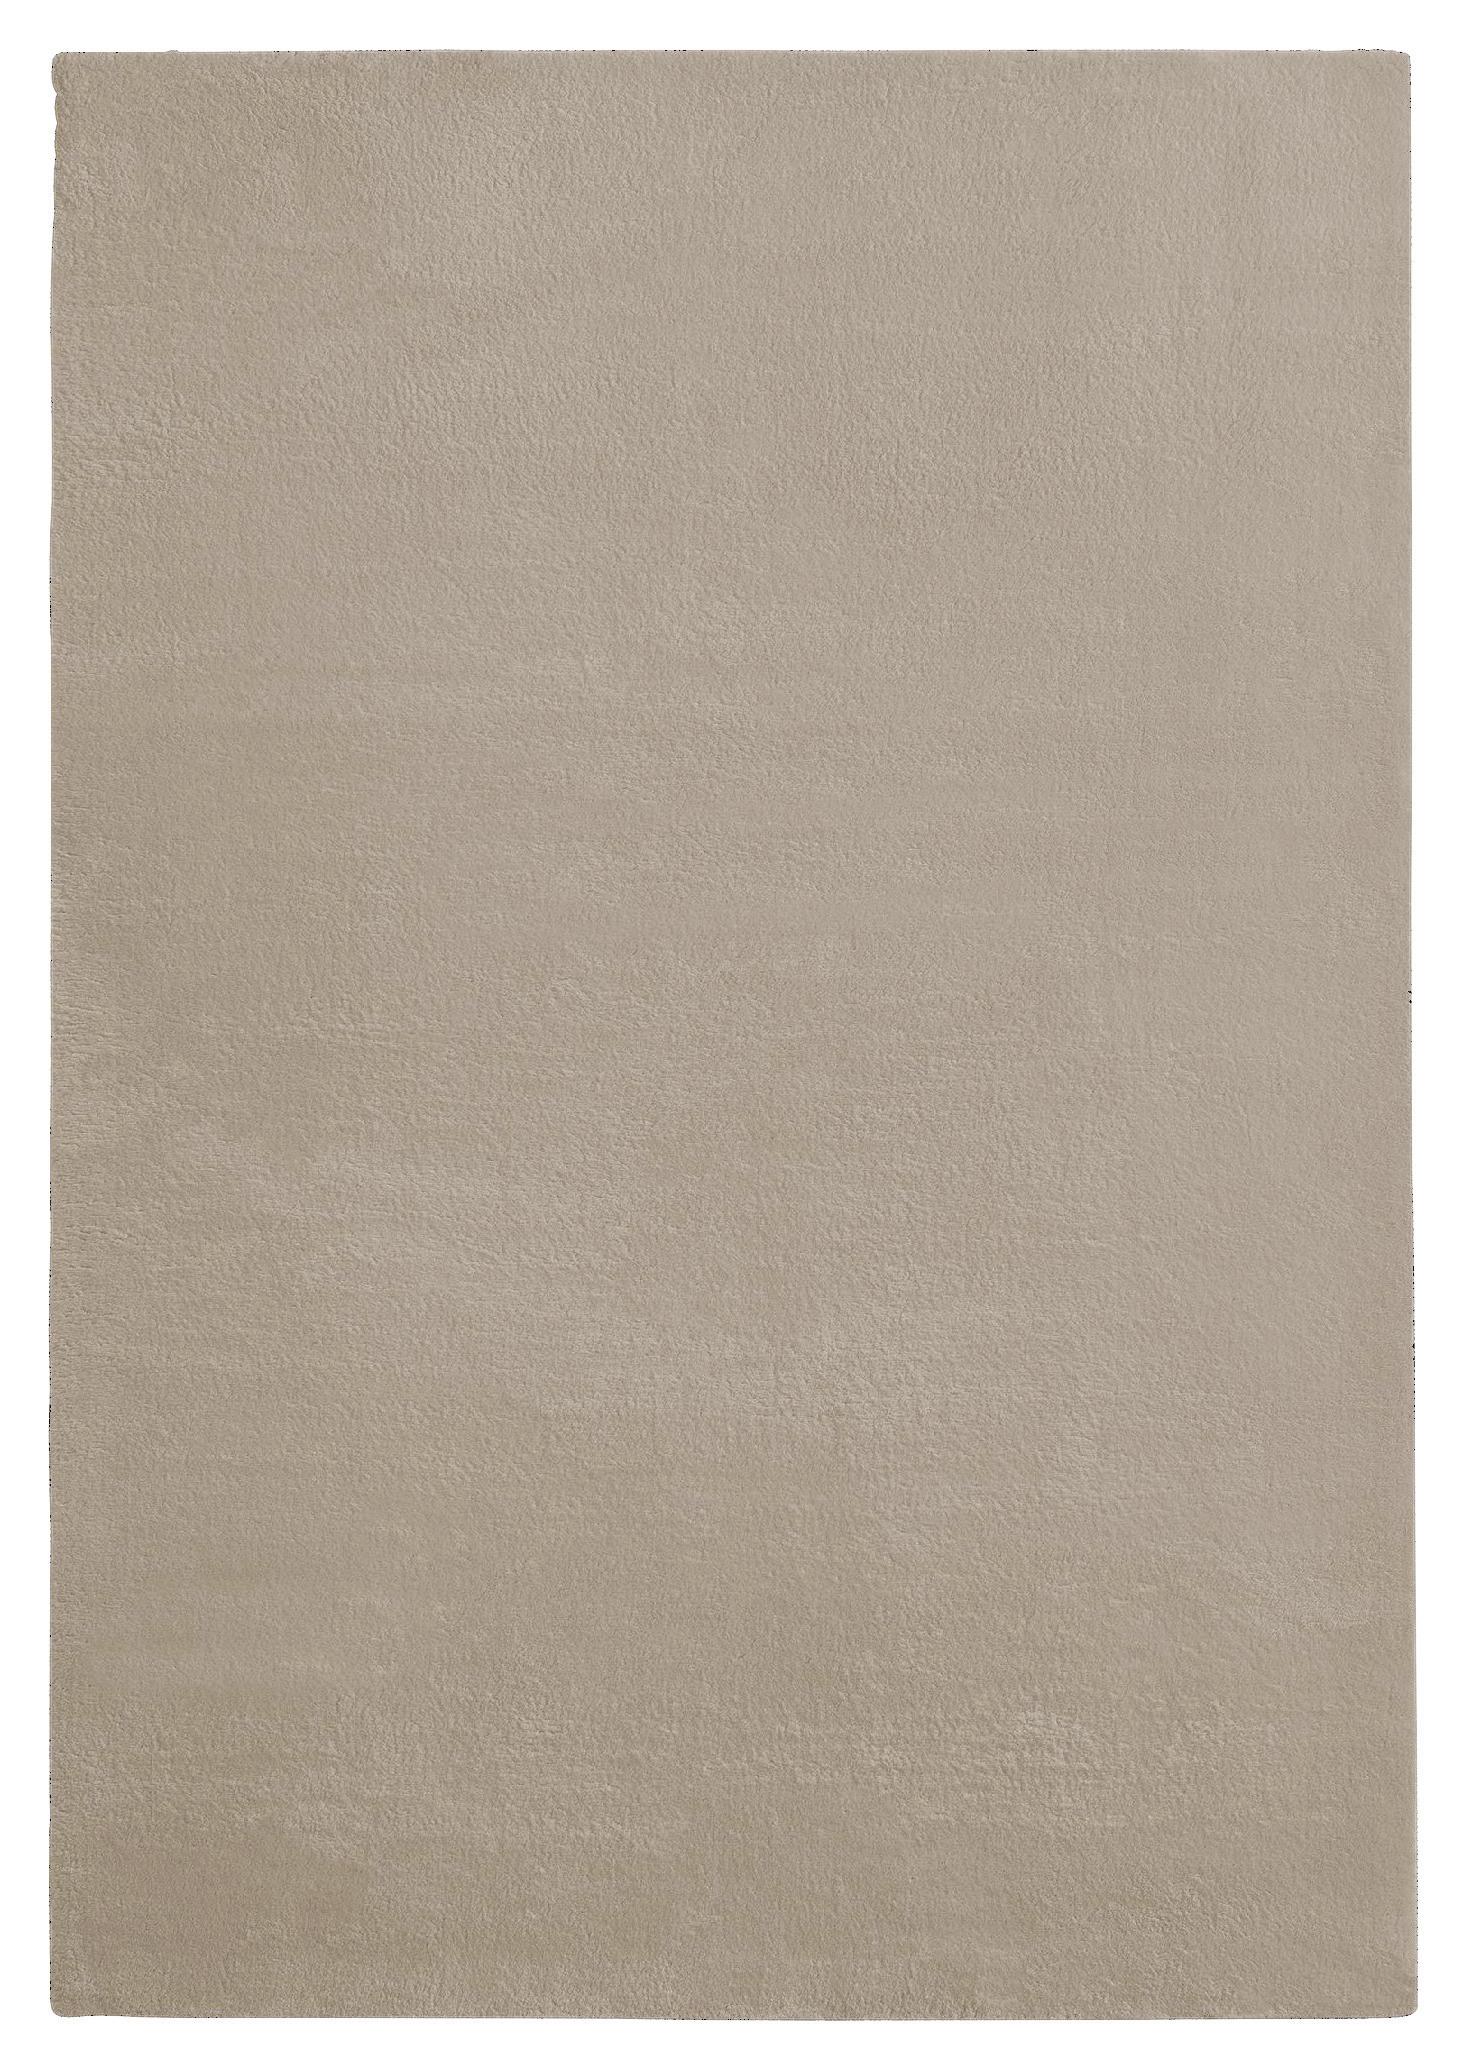 Fellteppich Melisander Sandfarben 100x150 cm - Sandfarben, Basics, Textil (100/150cm) - Luca Bessoni